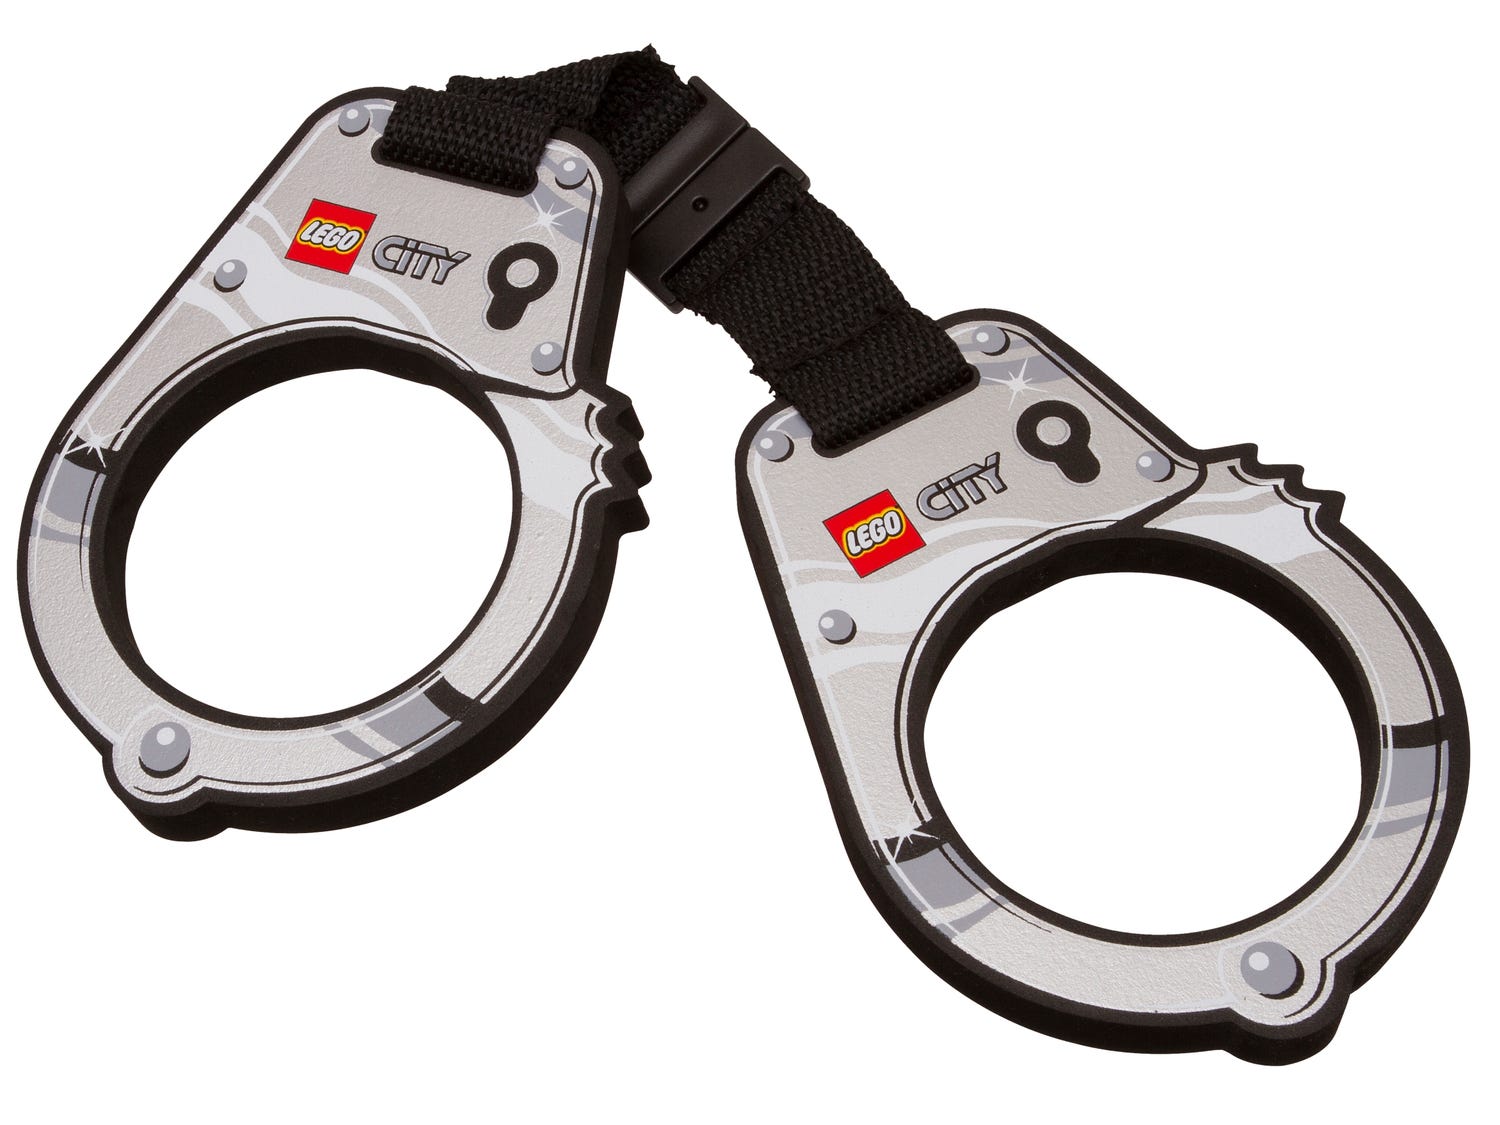 Police Handcuffs 2017